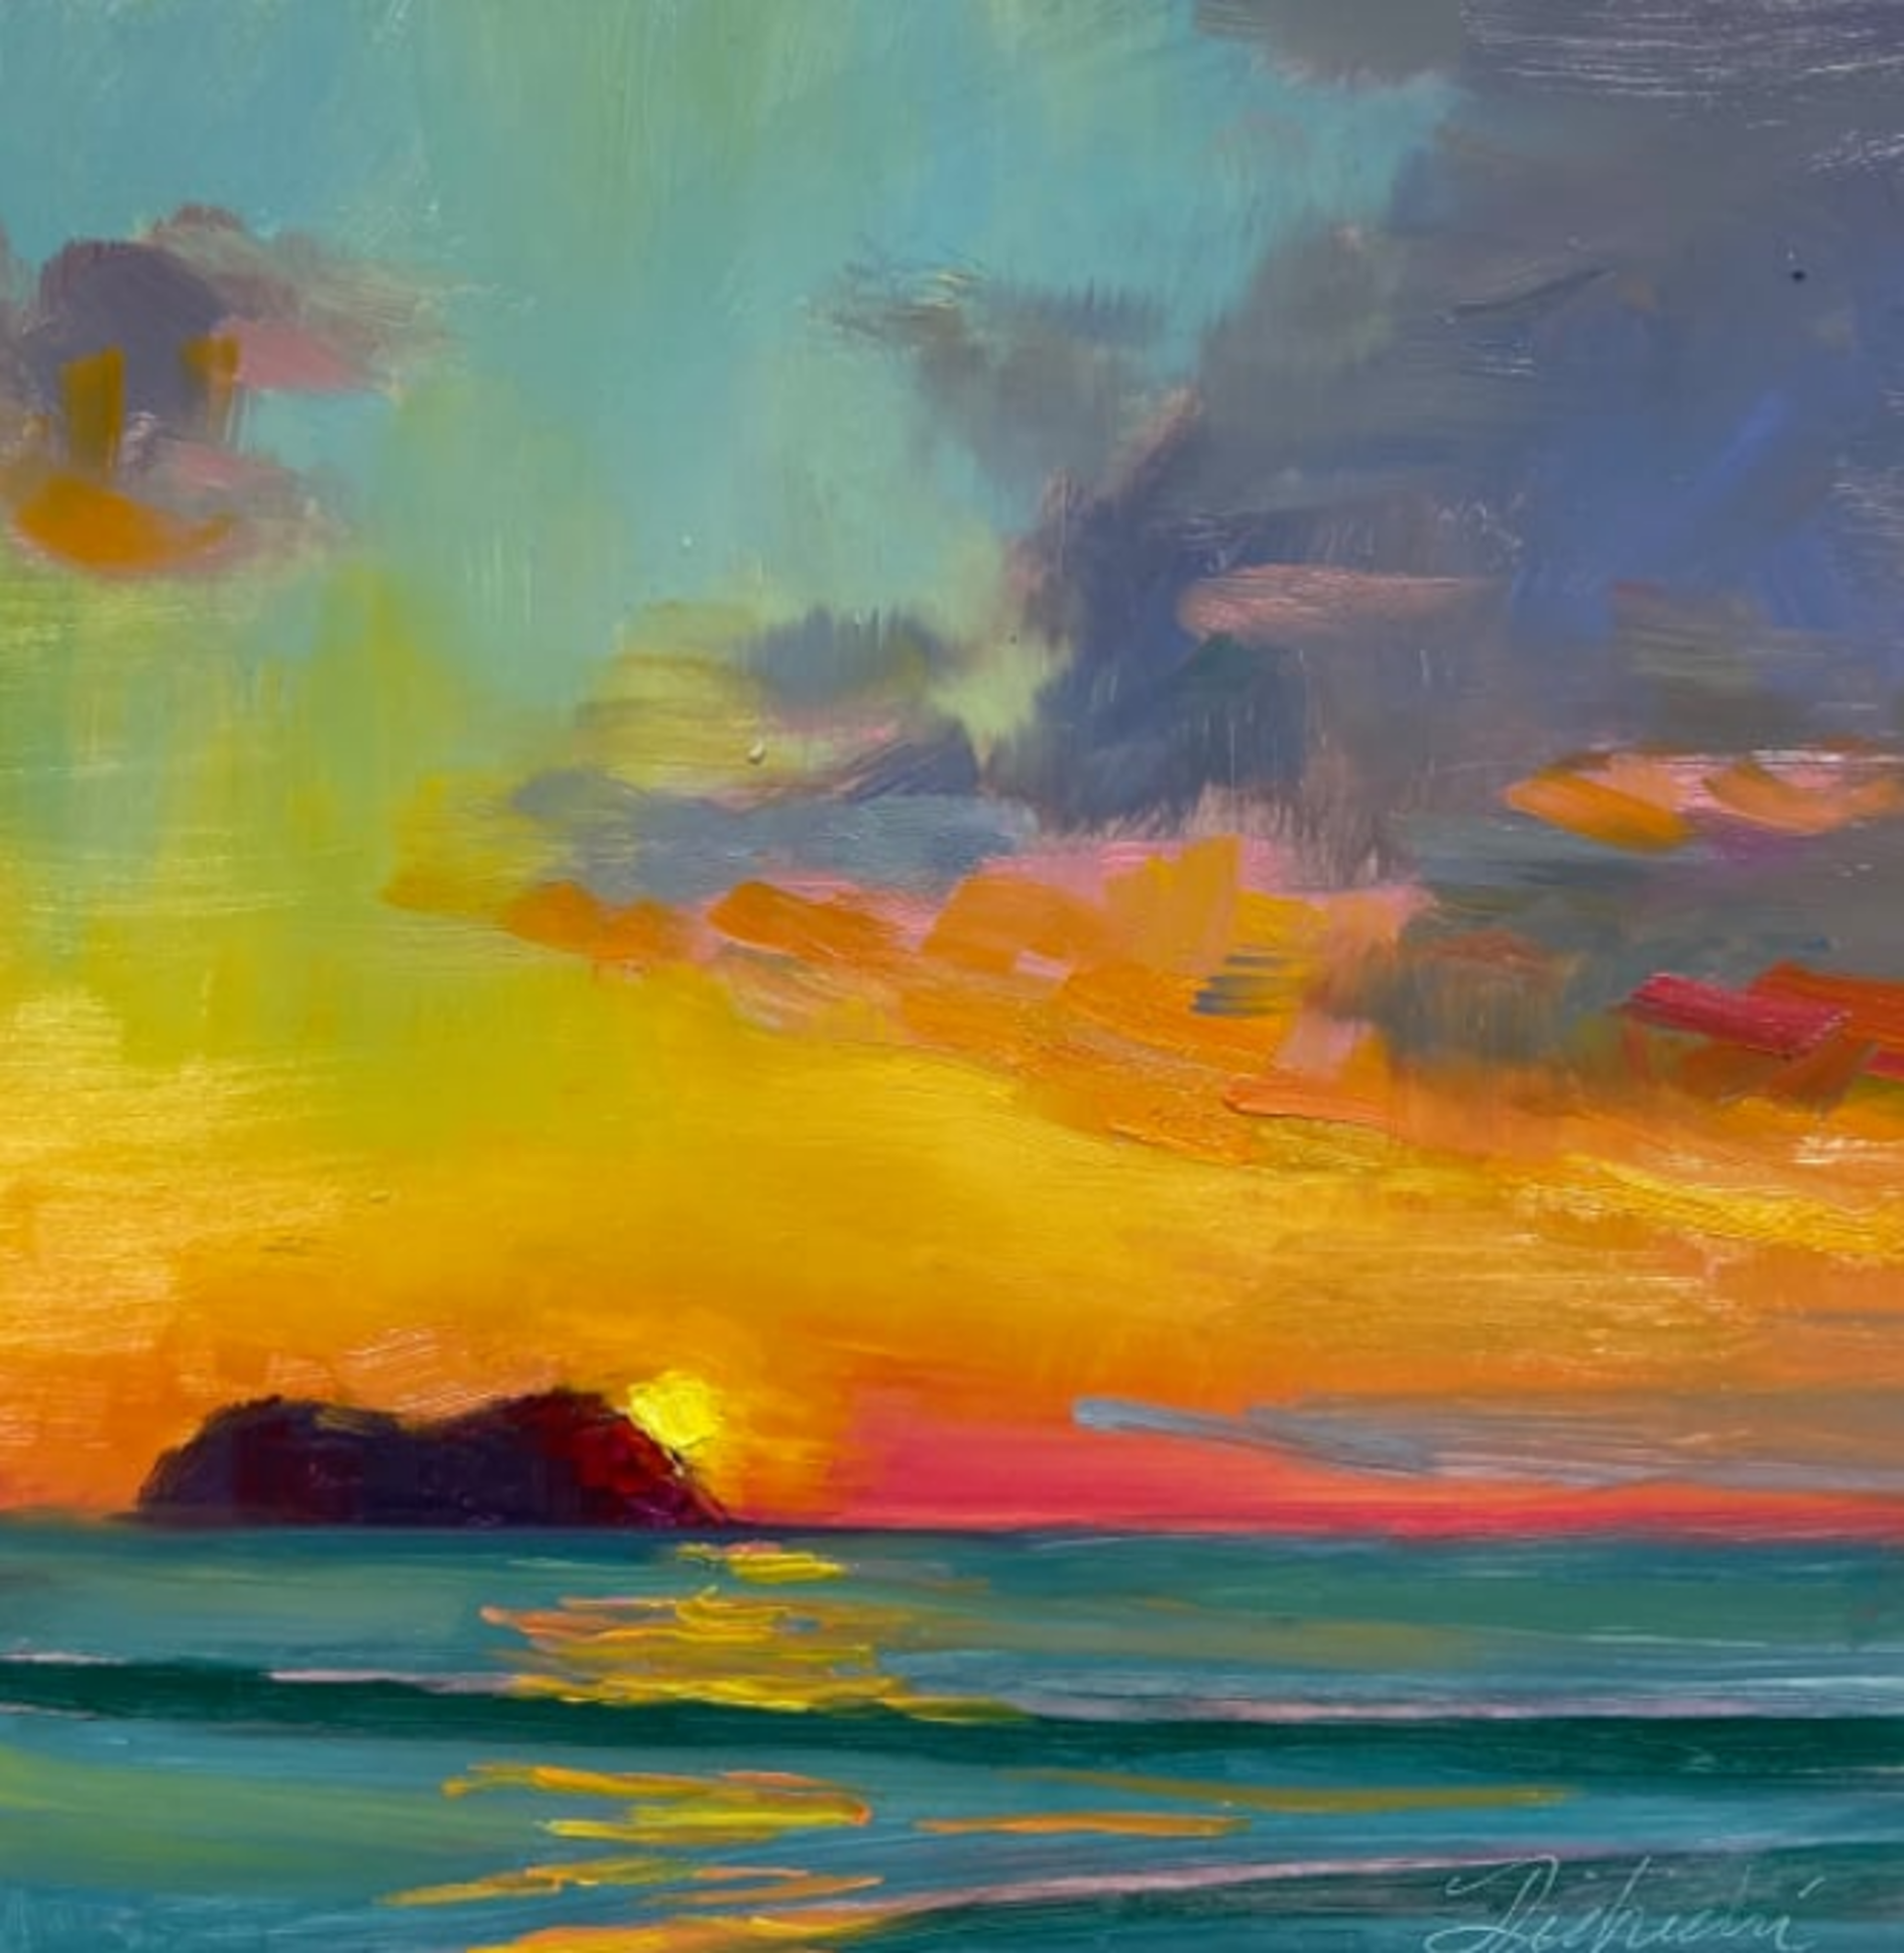 Sensational Sunset by Linda Richichi